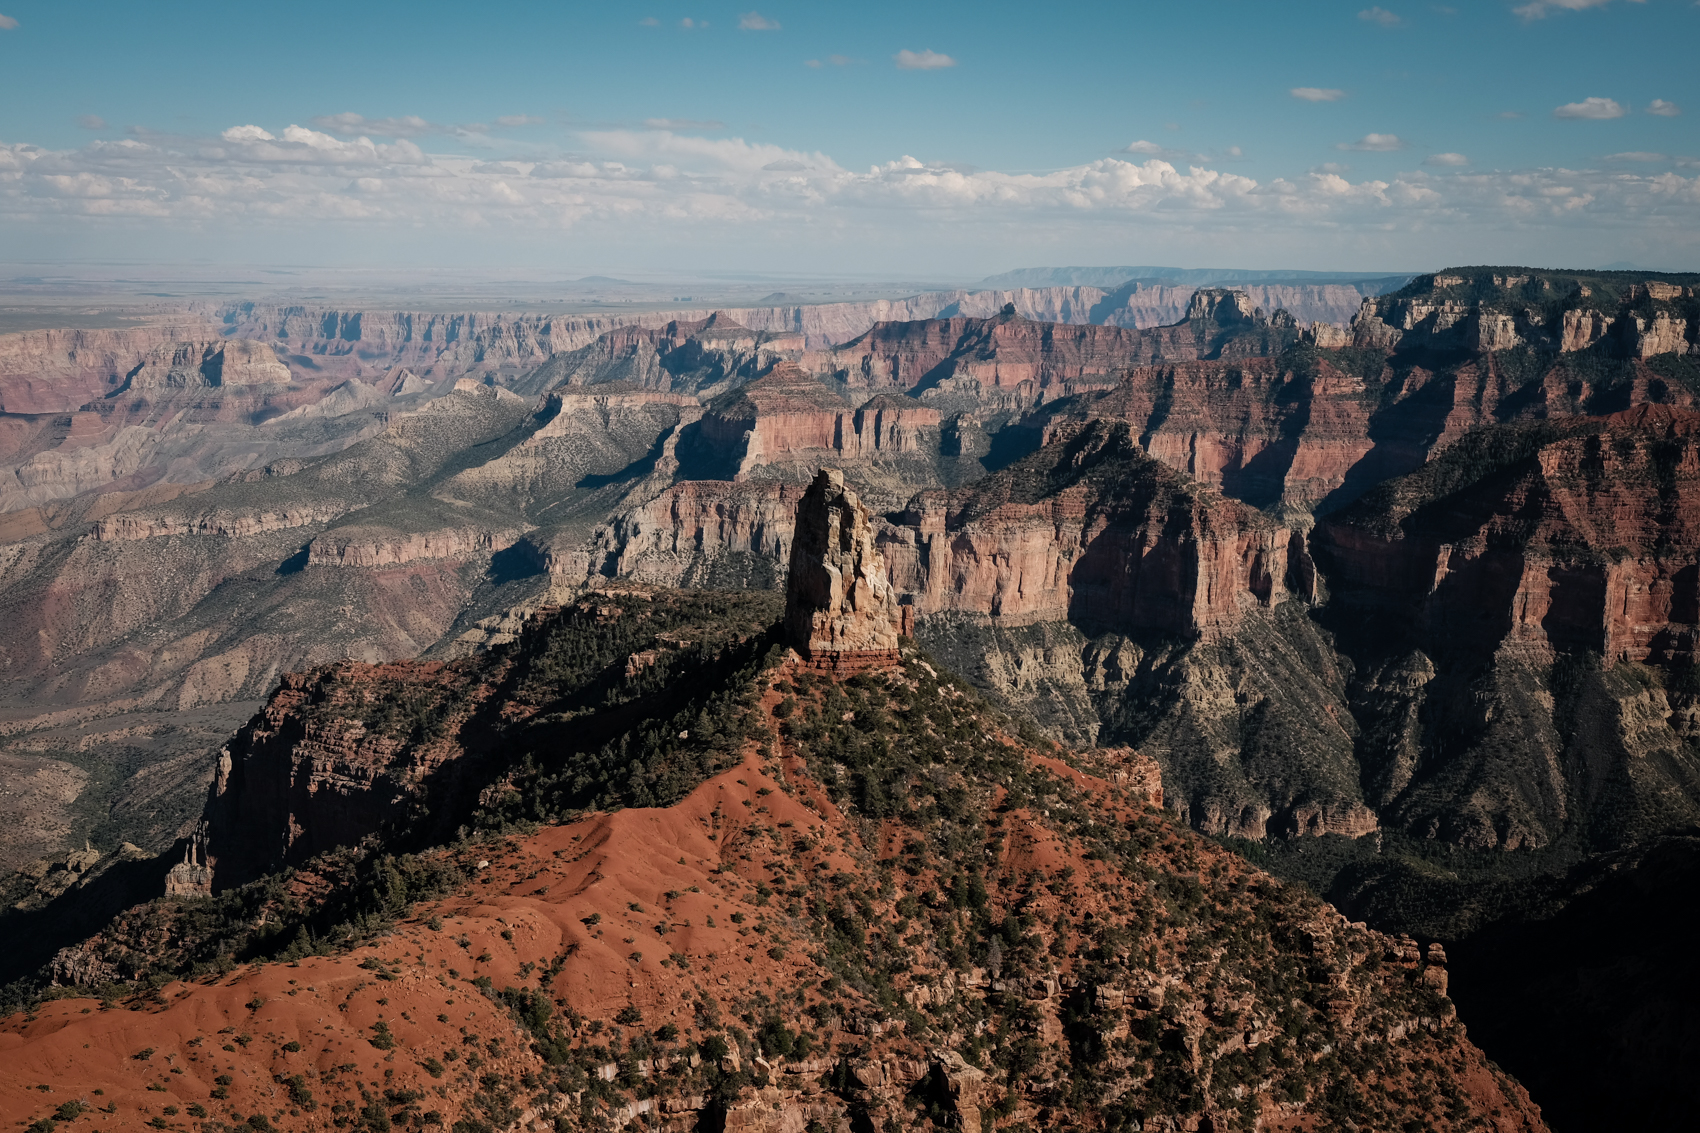  North Rim, Grand Canyon National Park, Arizona. September 2015. 